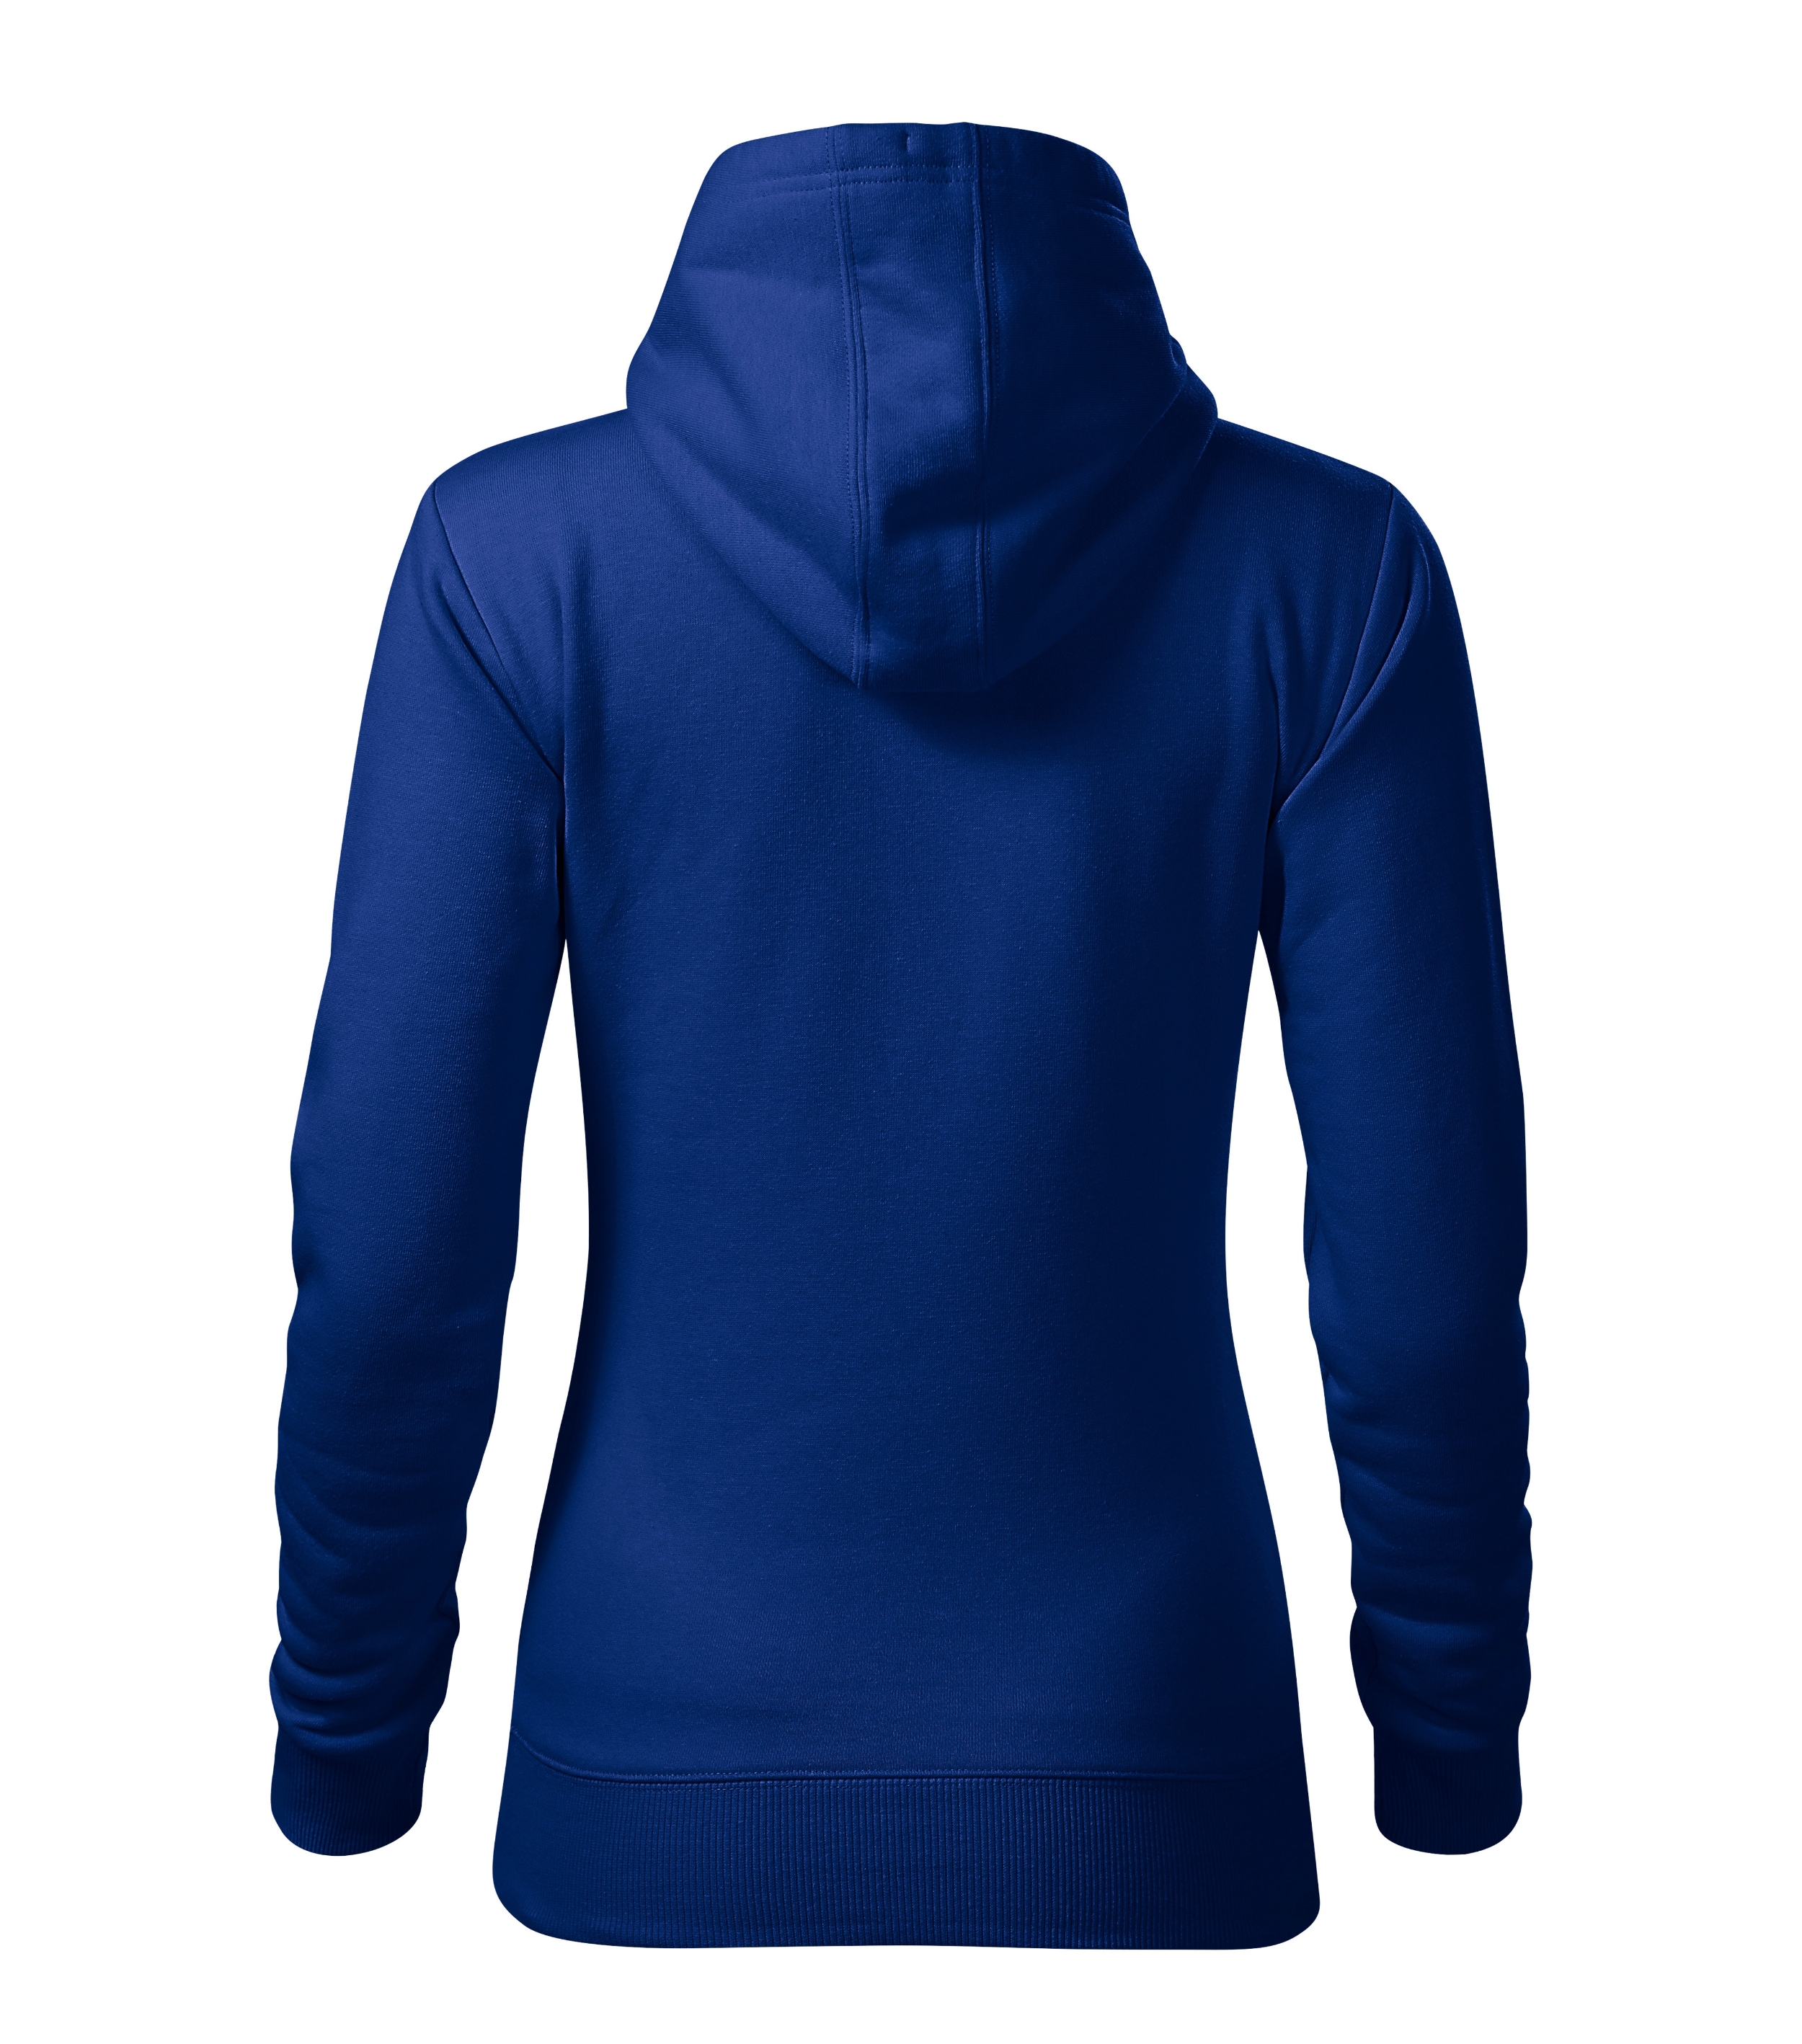 Cape 414 Sweatshirt Damen Oversize Pullover Damen Hoodie Sweatshirt Pulli Sweatshirts für Bekleidung Sweater Kapuzenpullover Frühling Hoddies Frauen